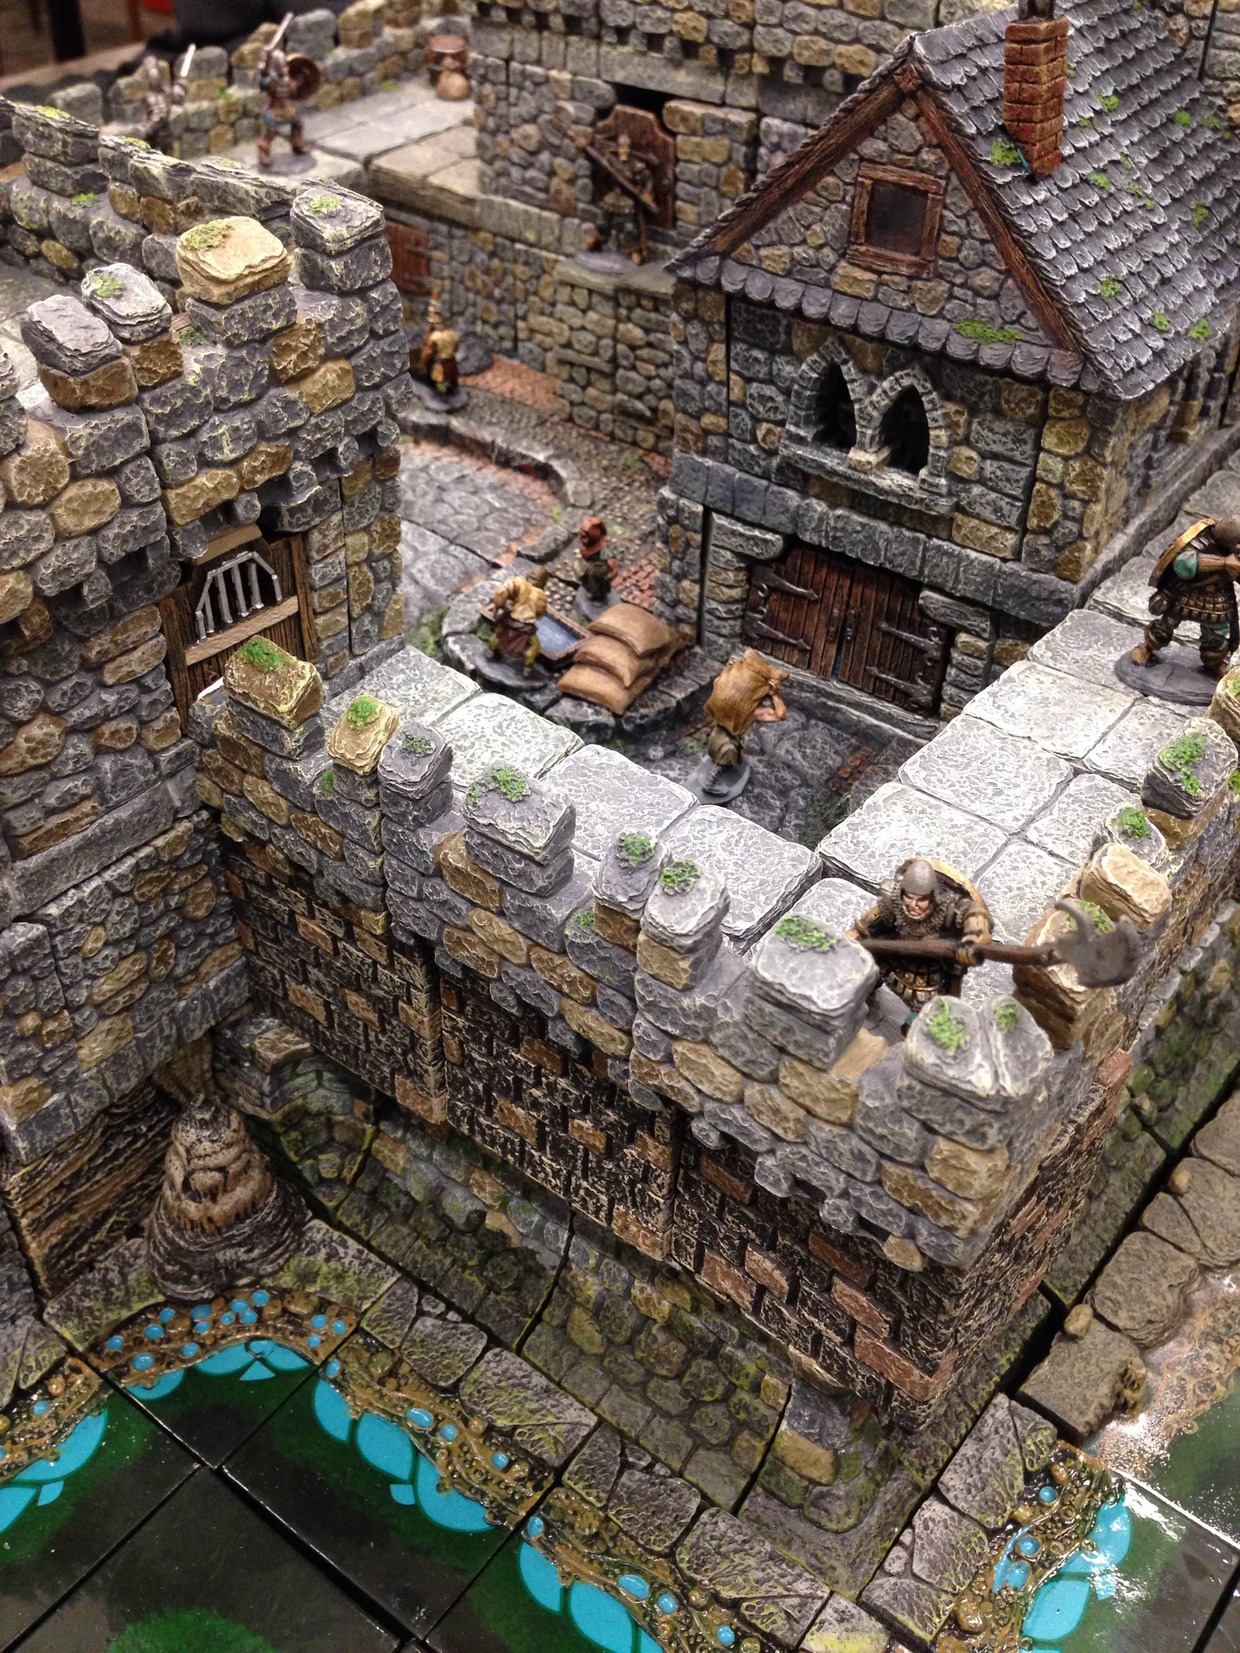 Bushwick-Based Dungeons and Dragons Company, Dwarven Forge, Raises Millions on Kickstarter